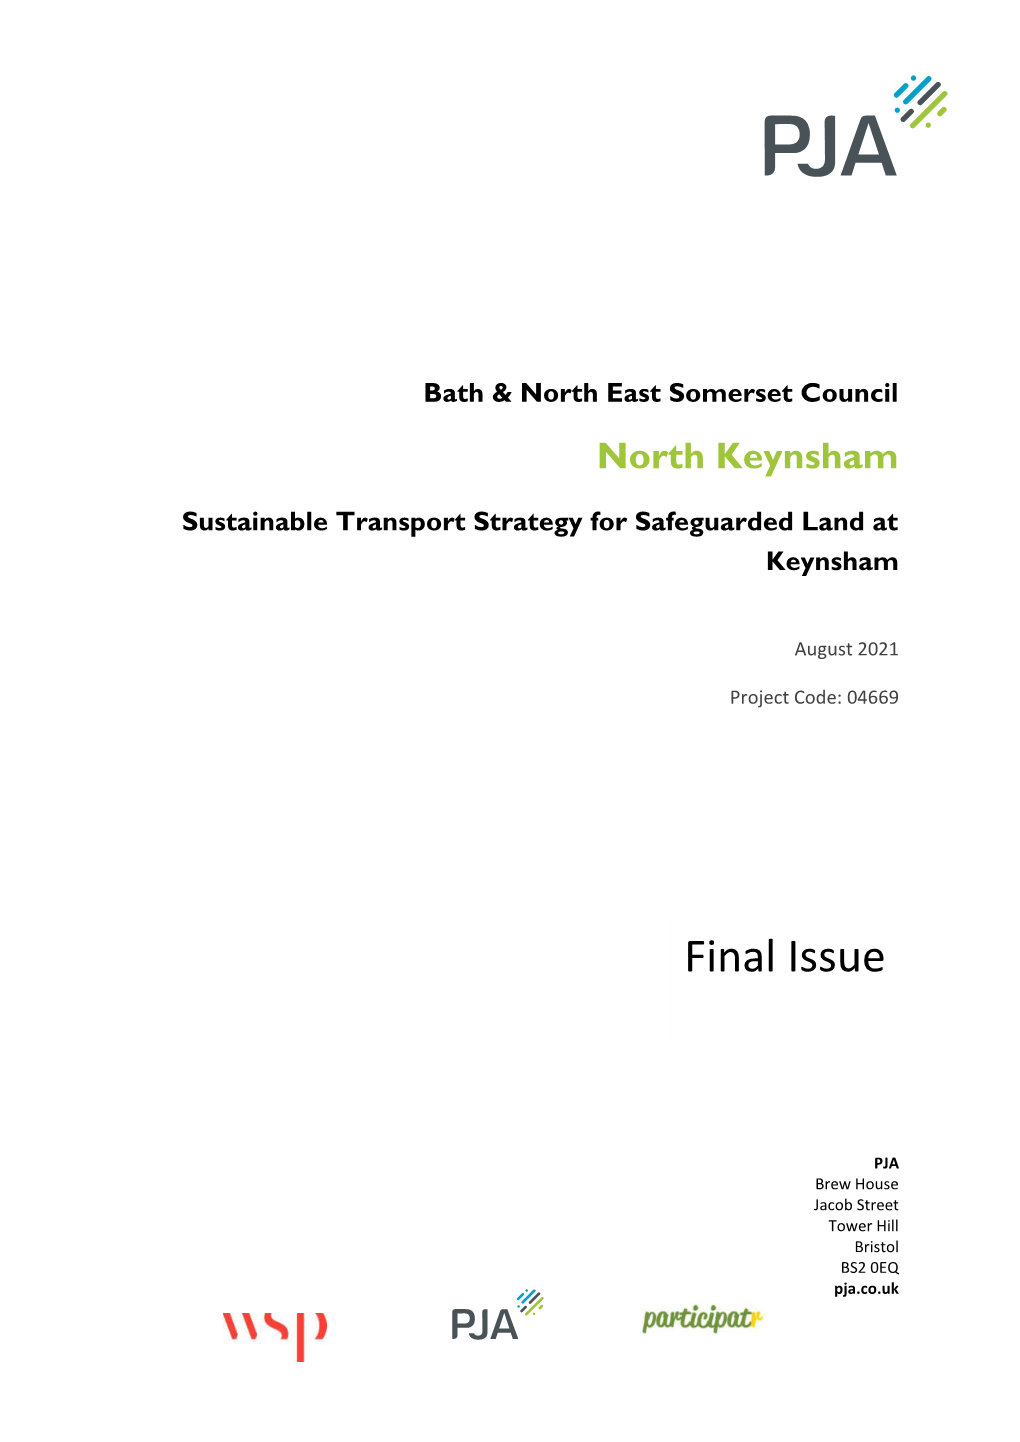 Sustainable Transport Strategy for Safeguarded Land at Keynsham